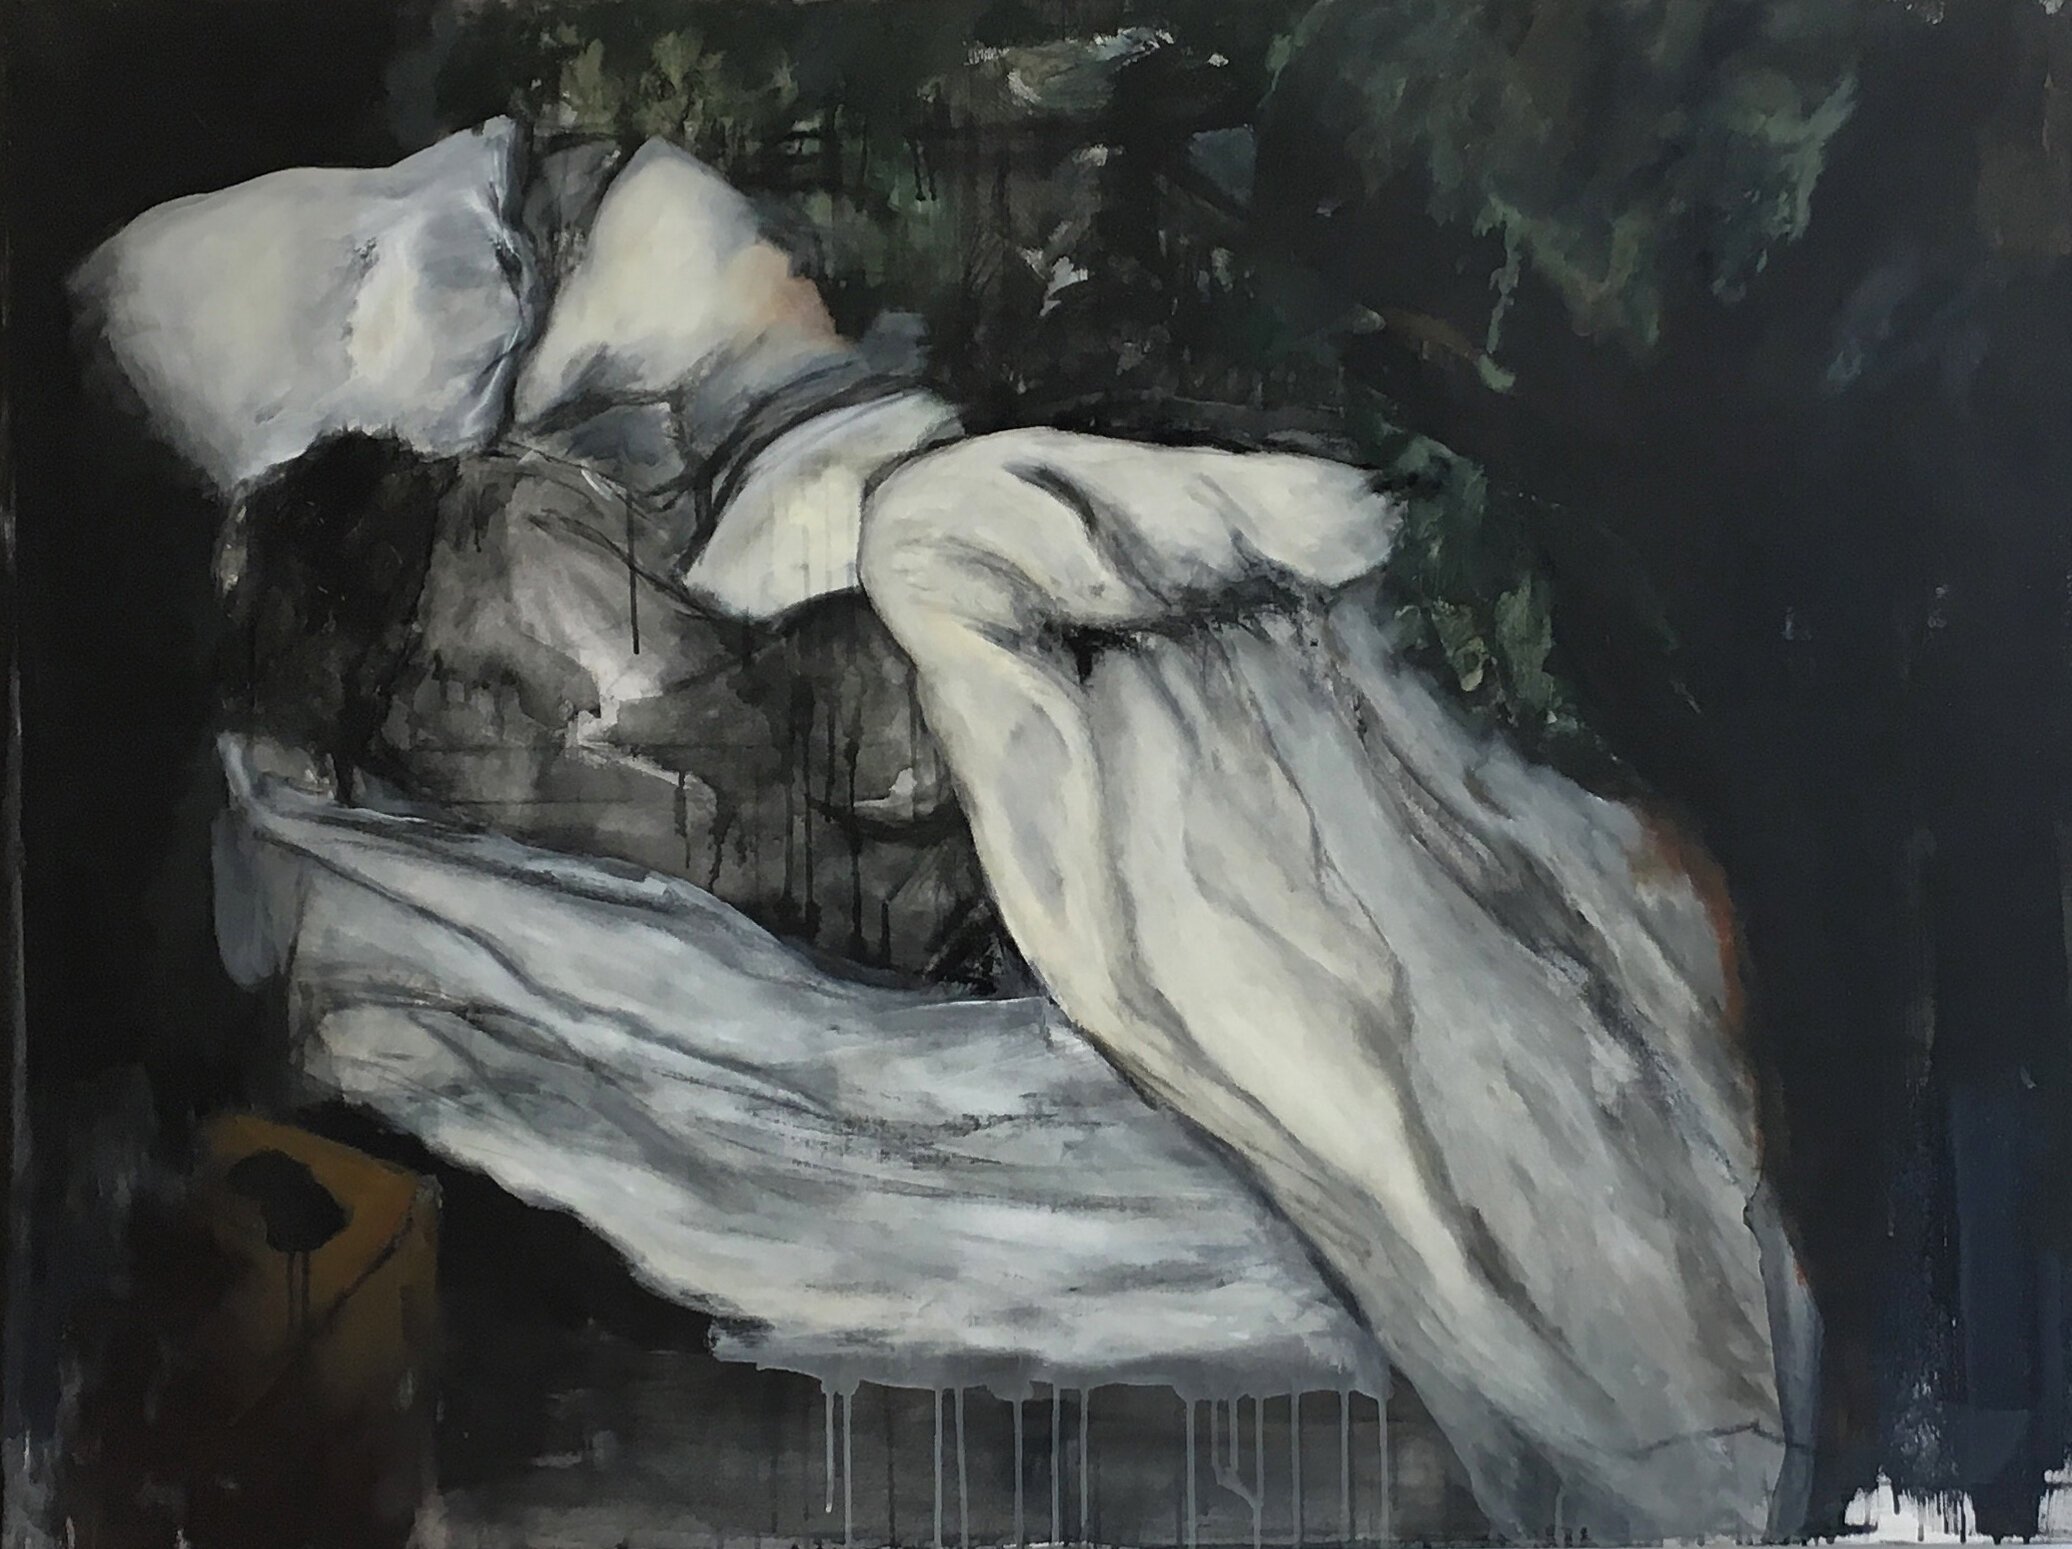  Sleeping Figure, 2018, Acrylic paint on canvas, h104 x w173 cm  